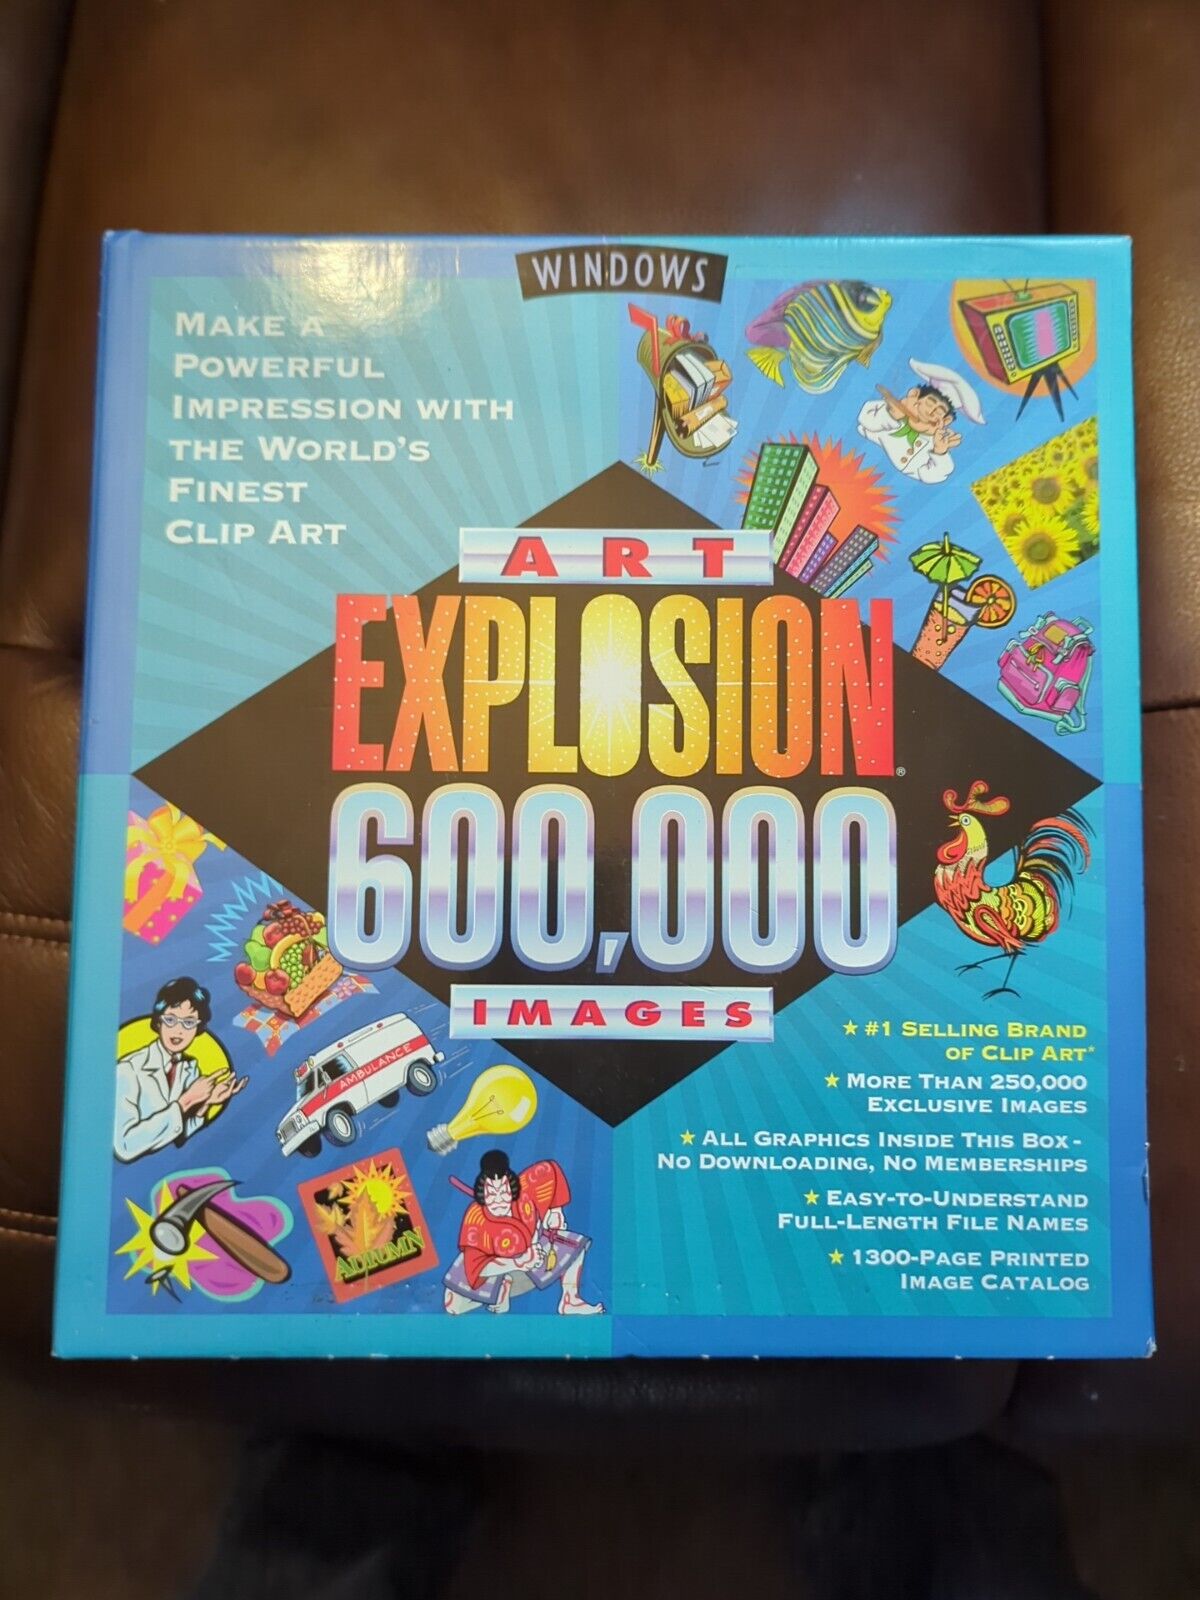 Windows Art Explosion Clip Art Graphic Designer 17 CDs 600,000 Images